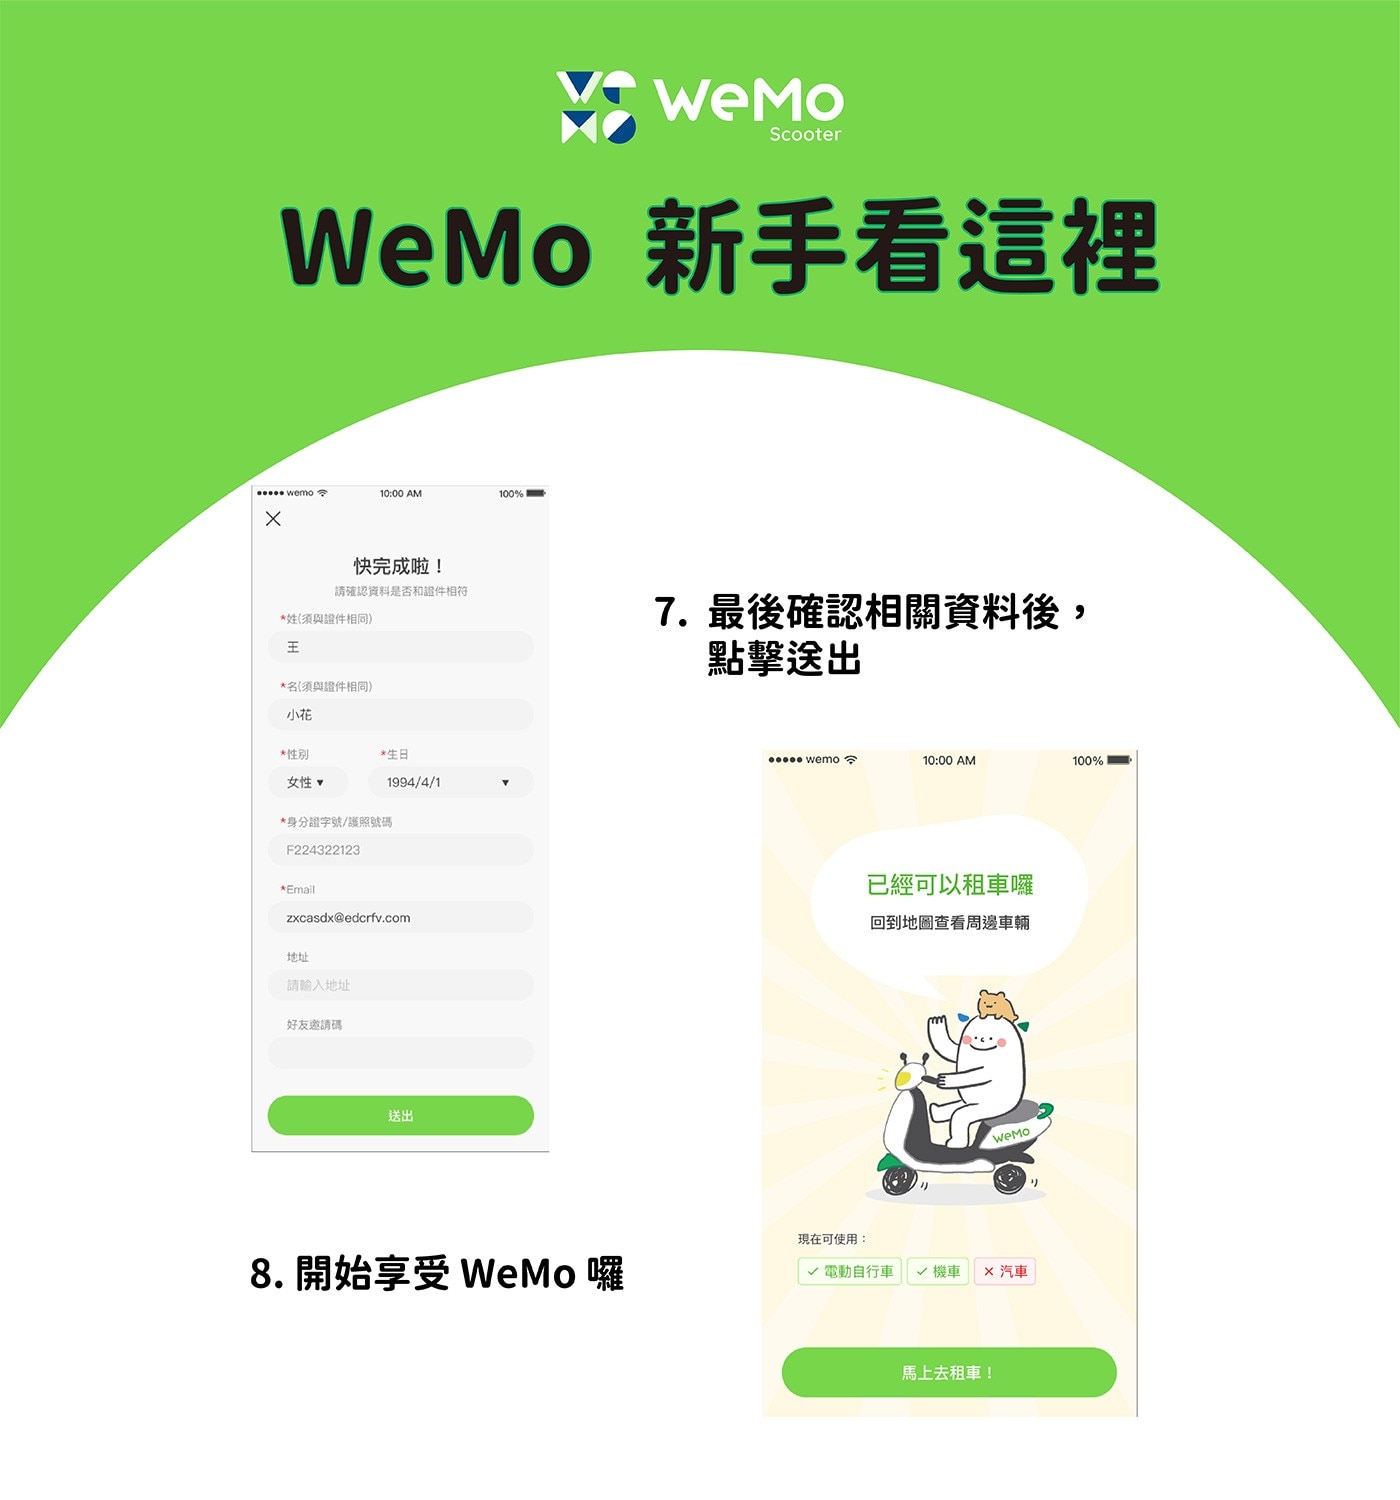 WEMO Scooter，亞洲第一個智慧電動機車即時租借服務，結合「智慧 App 操作功能」、「無特定站點 24 小時即時租借」及「環保綠能電動機車」。